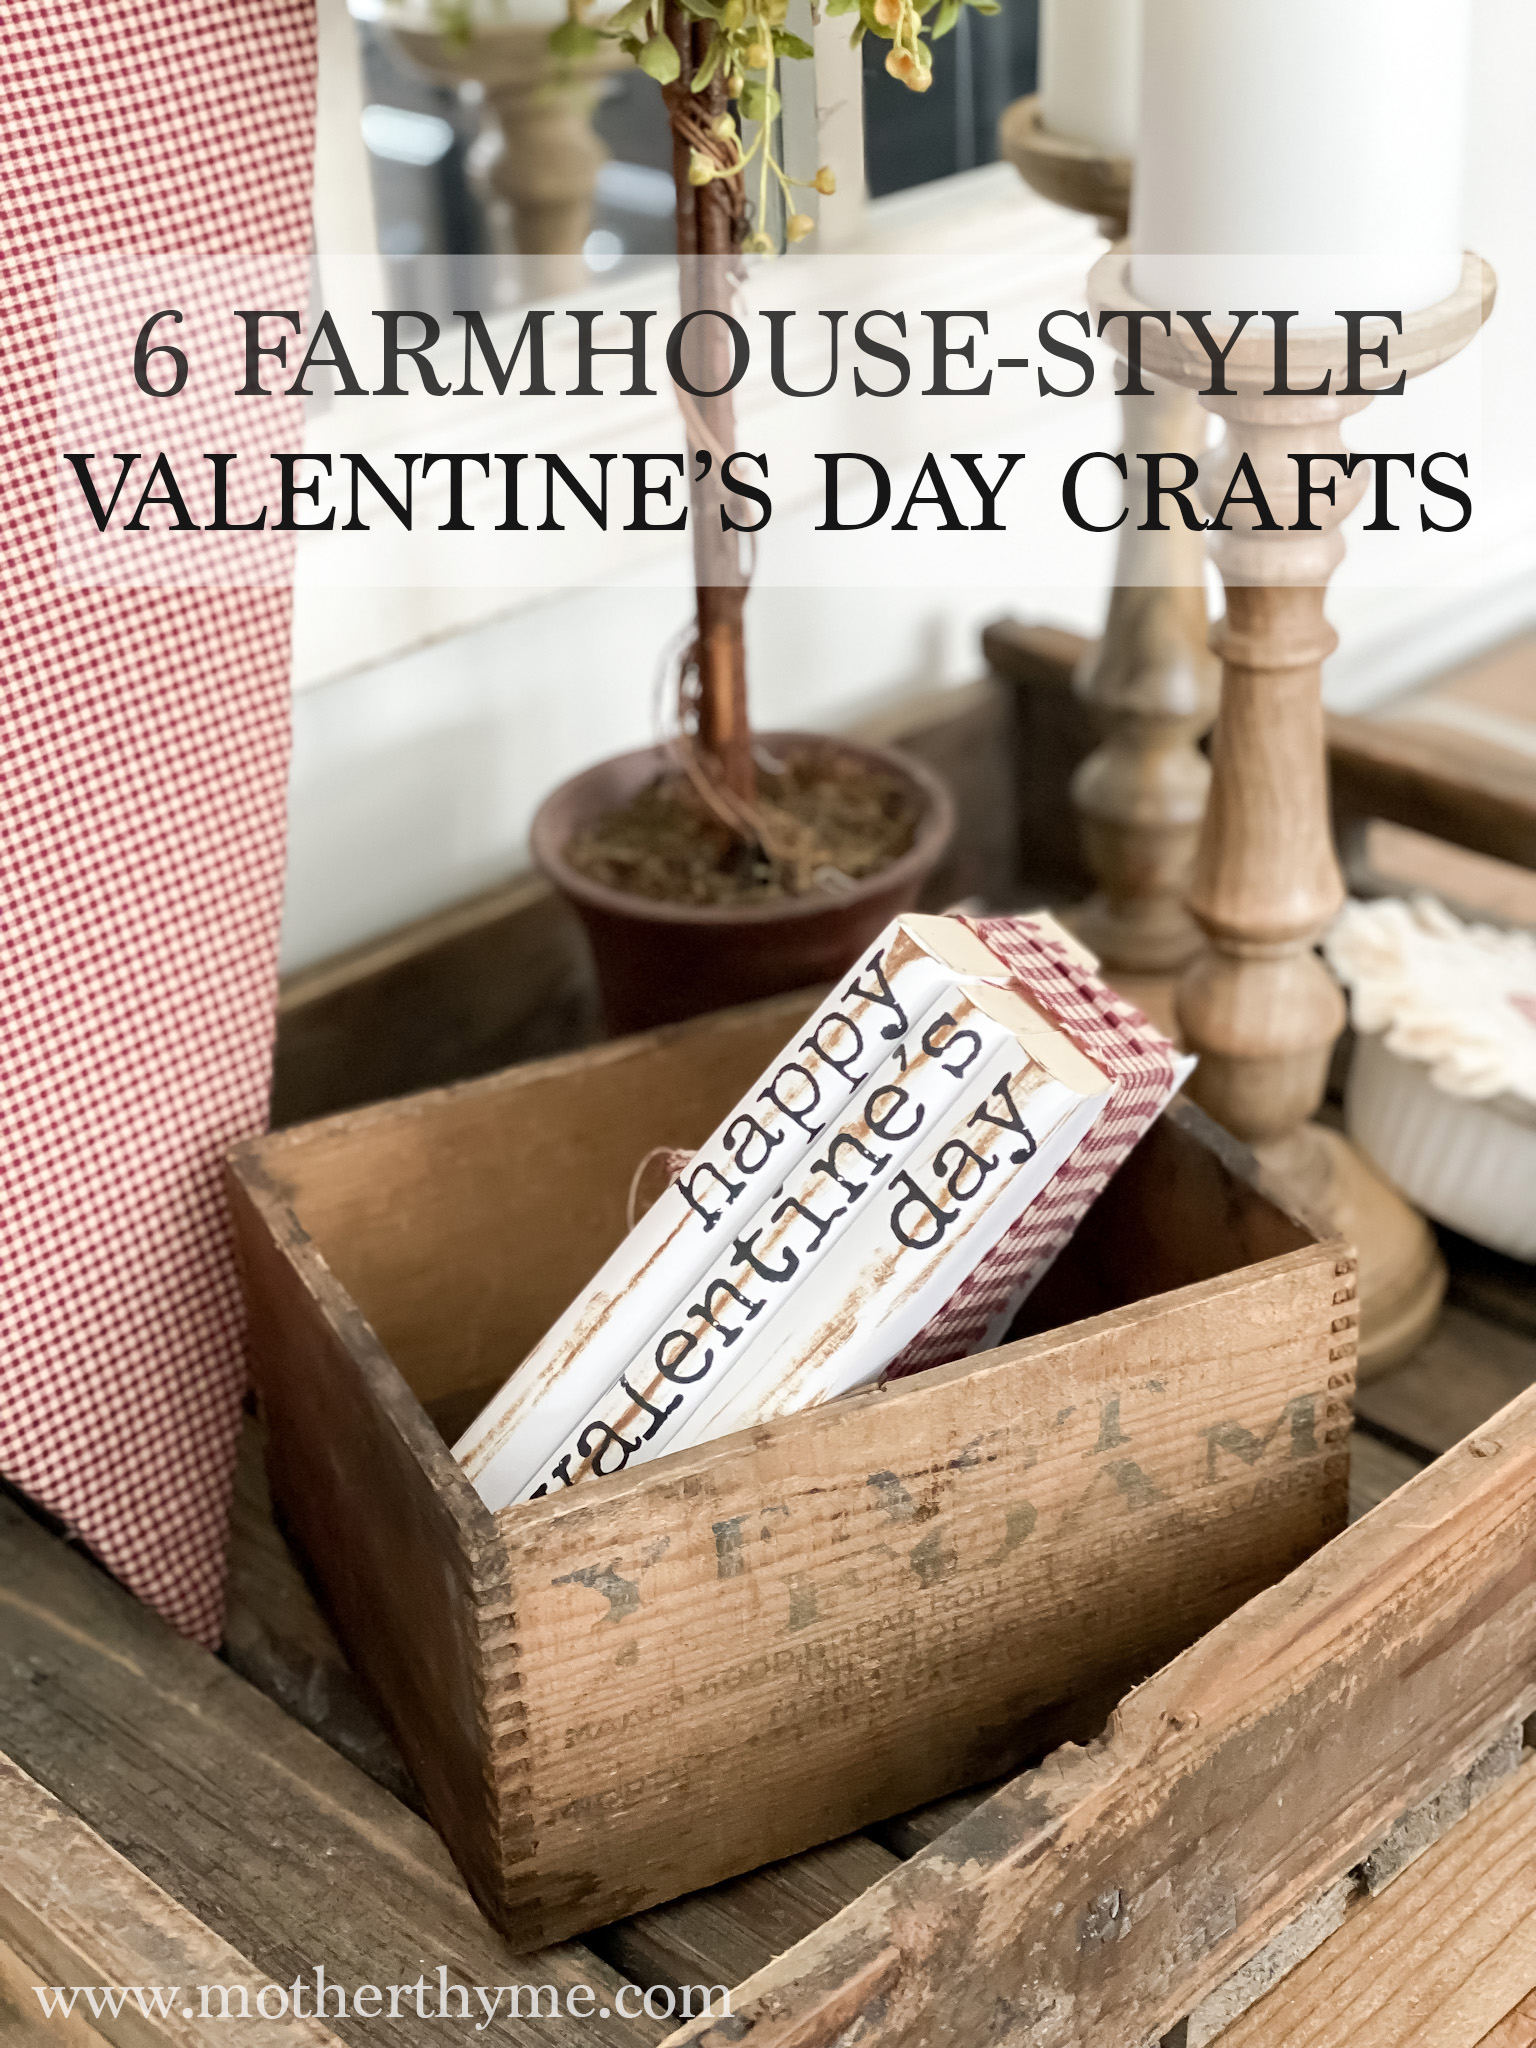 6 Farmhouse-Style Valentine’s Day Crafts